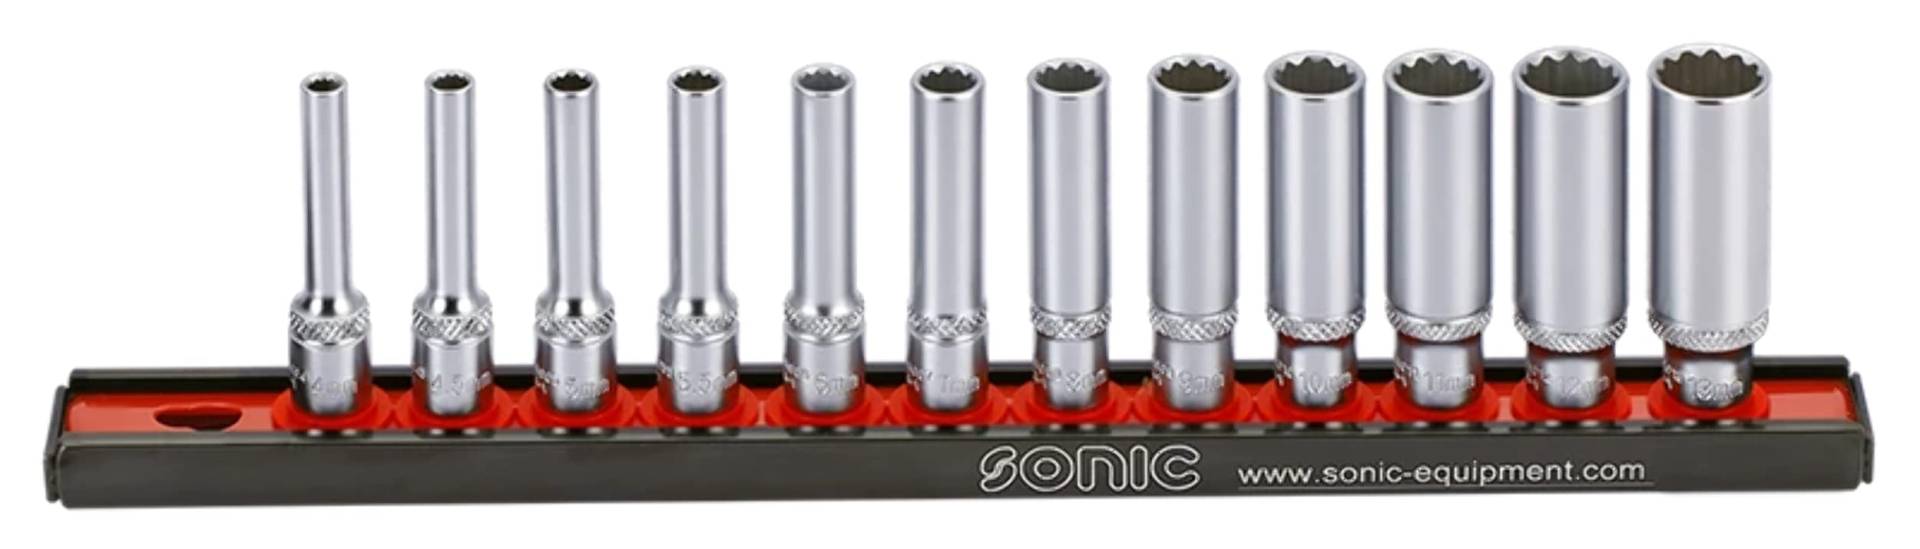 Sonic 101202 1/4 Zoll Nuss Set 12 Kant Lang Steckleiste 4 4,5 5 5,5 6 7 8 9 10 11 12 13mm von Sonic